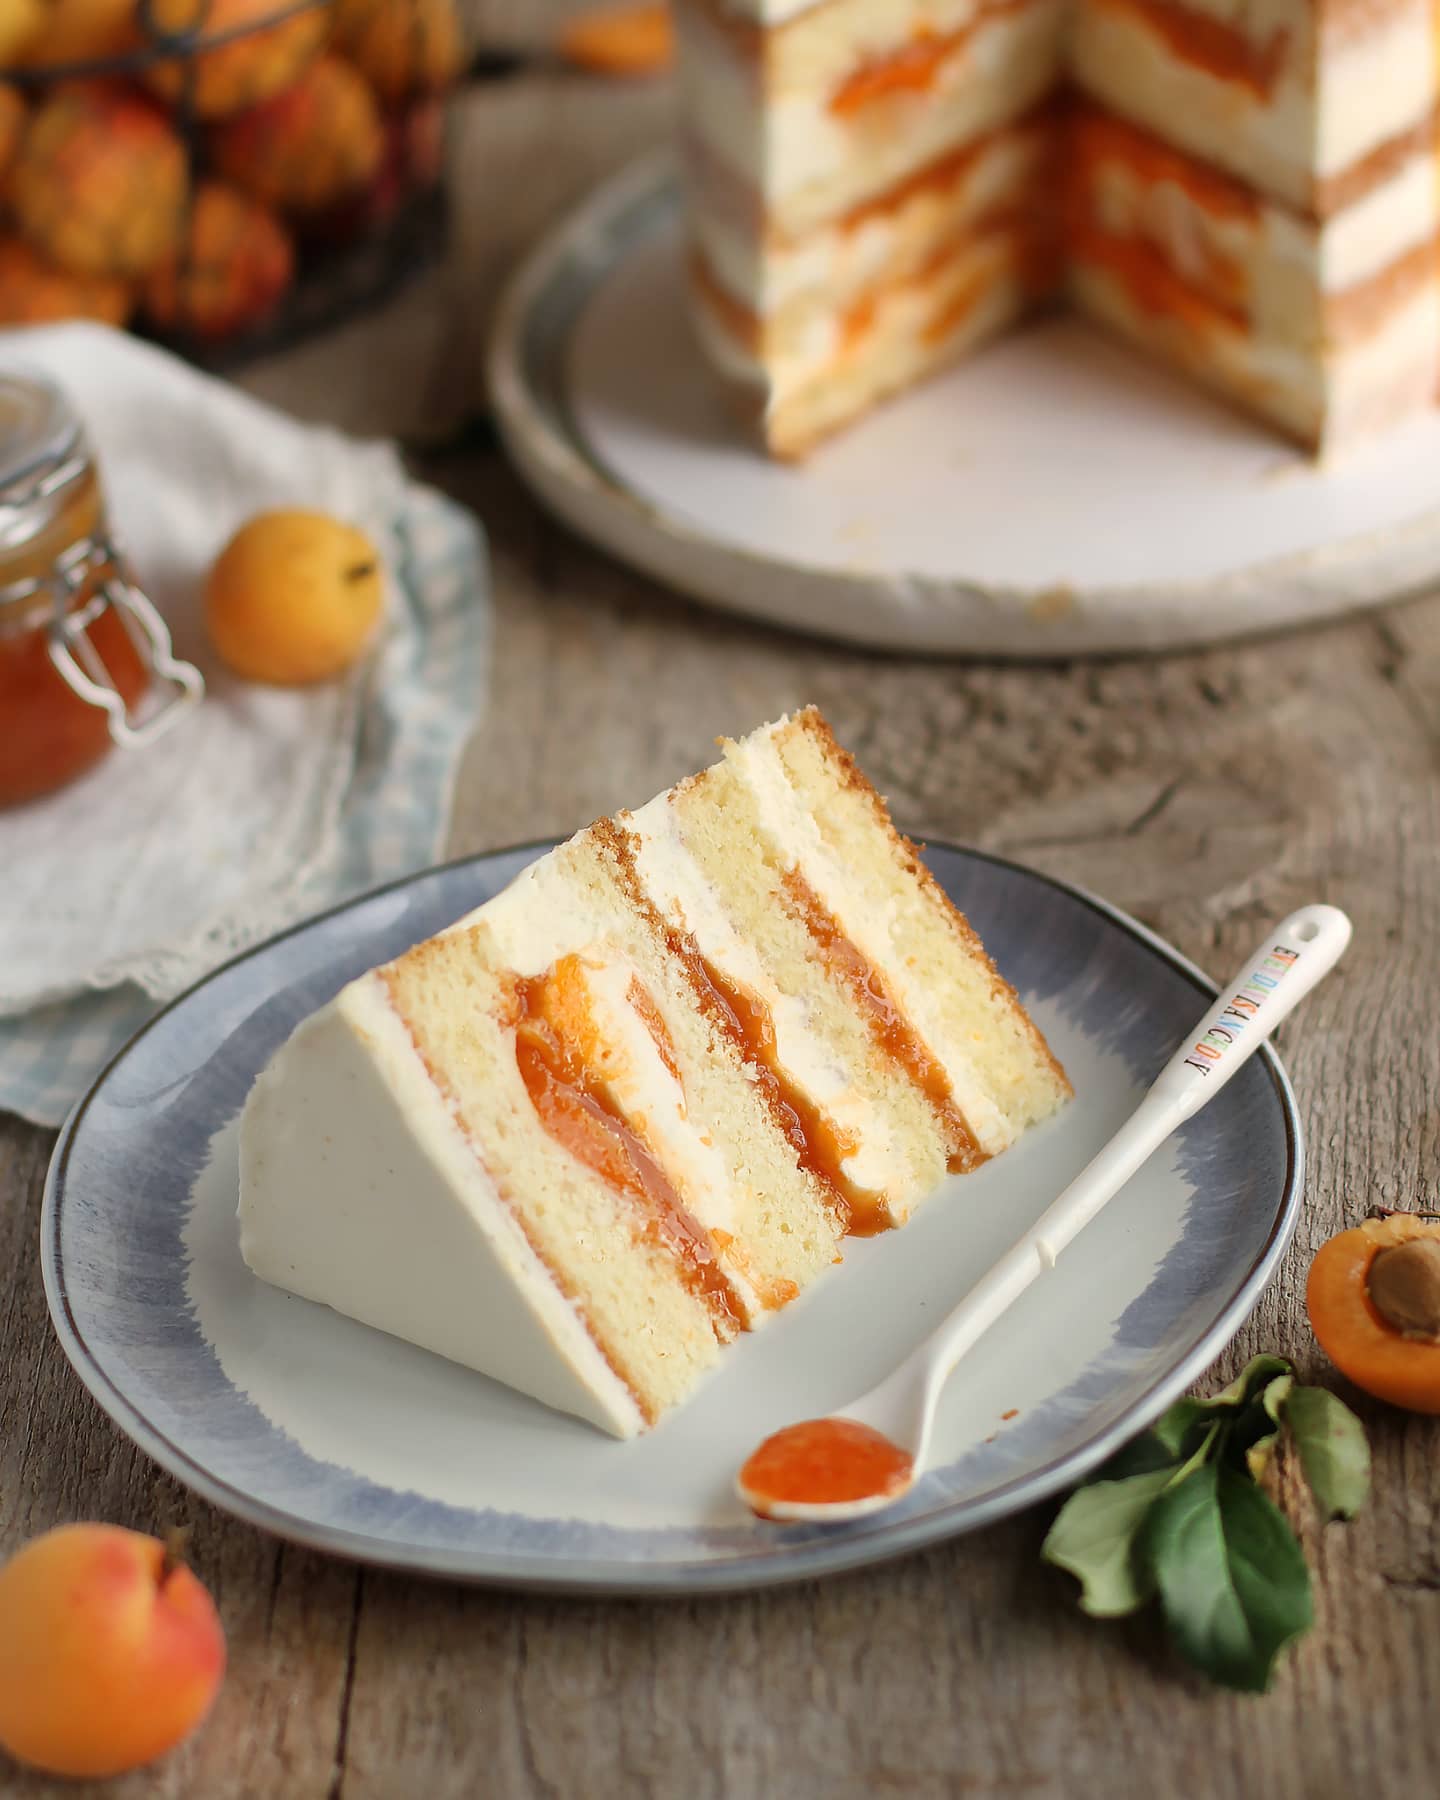 Apricot cake